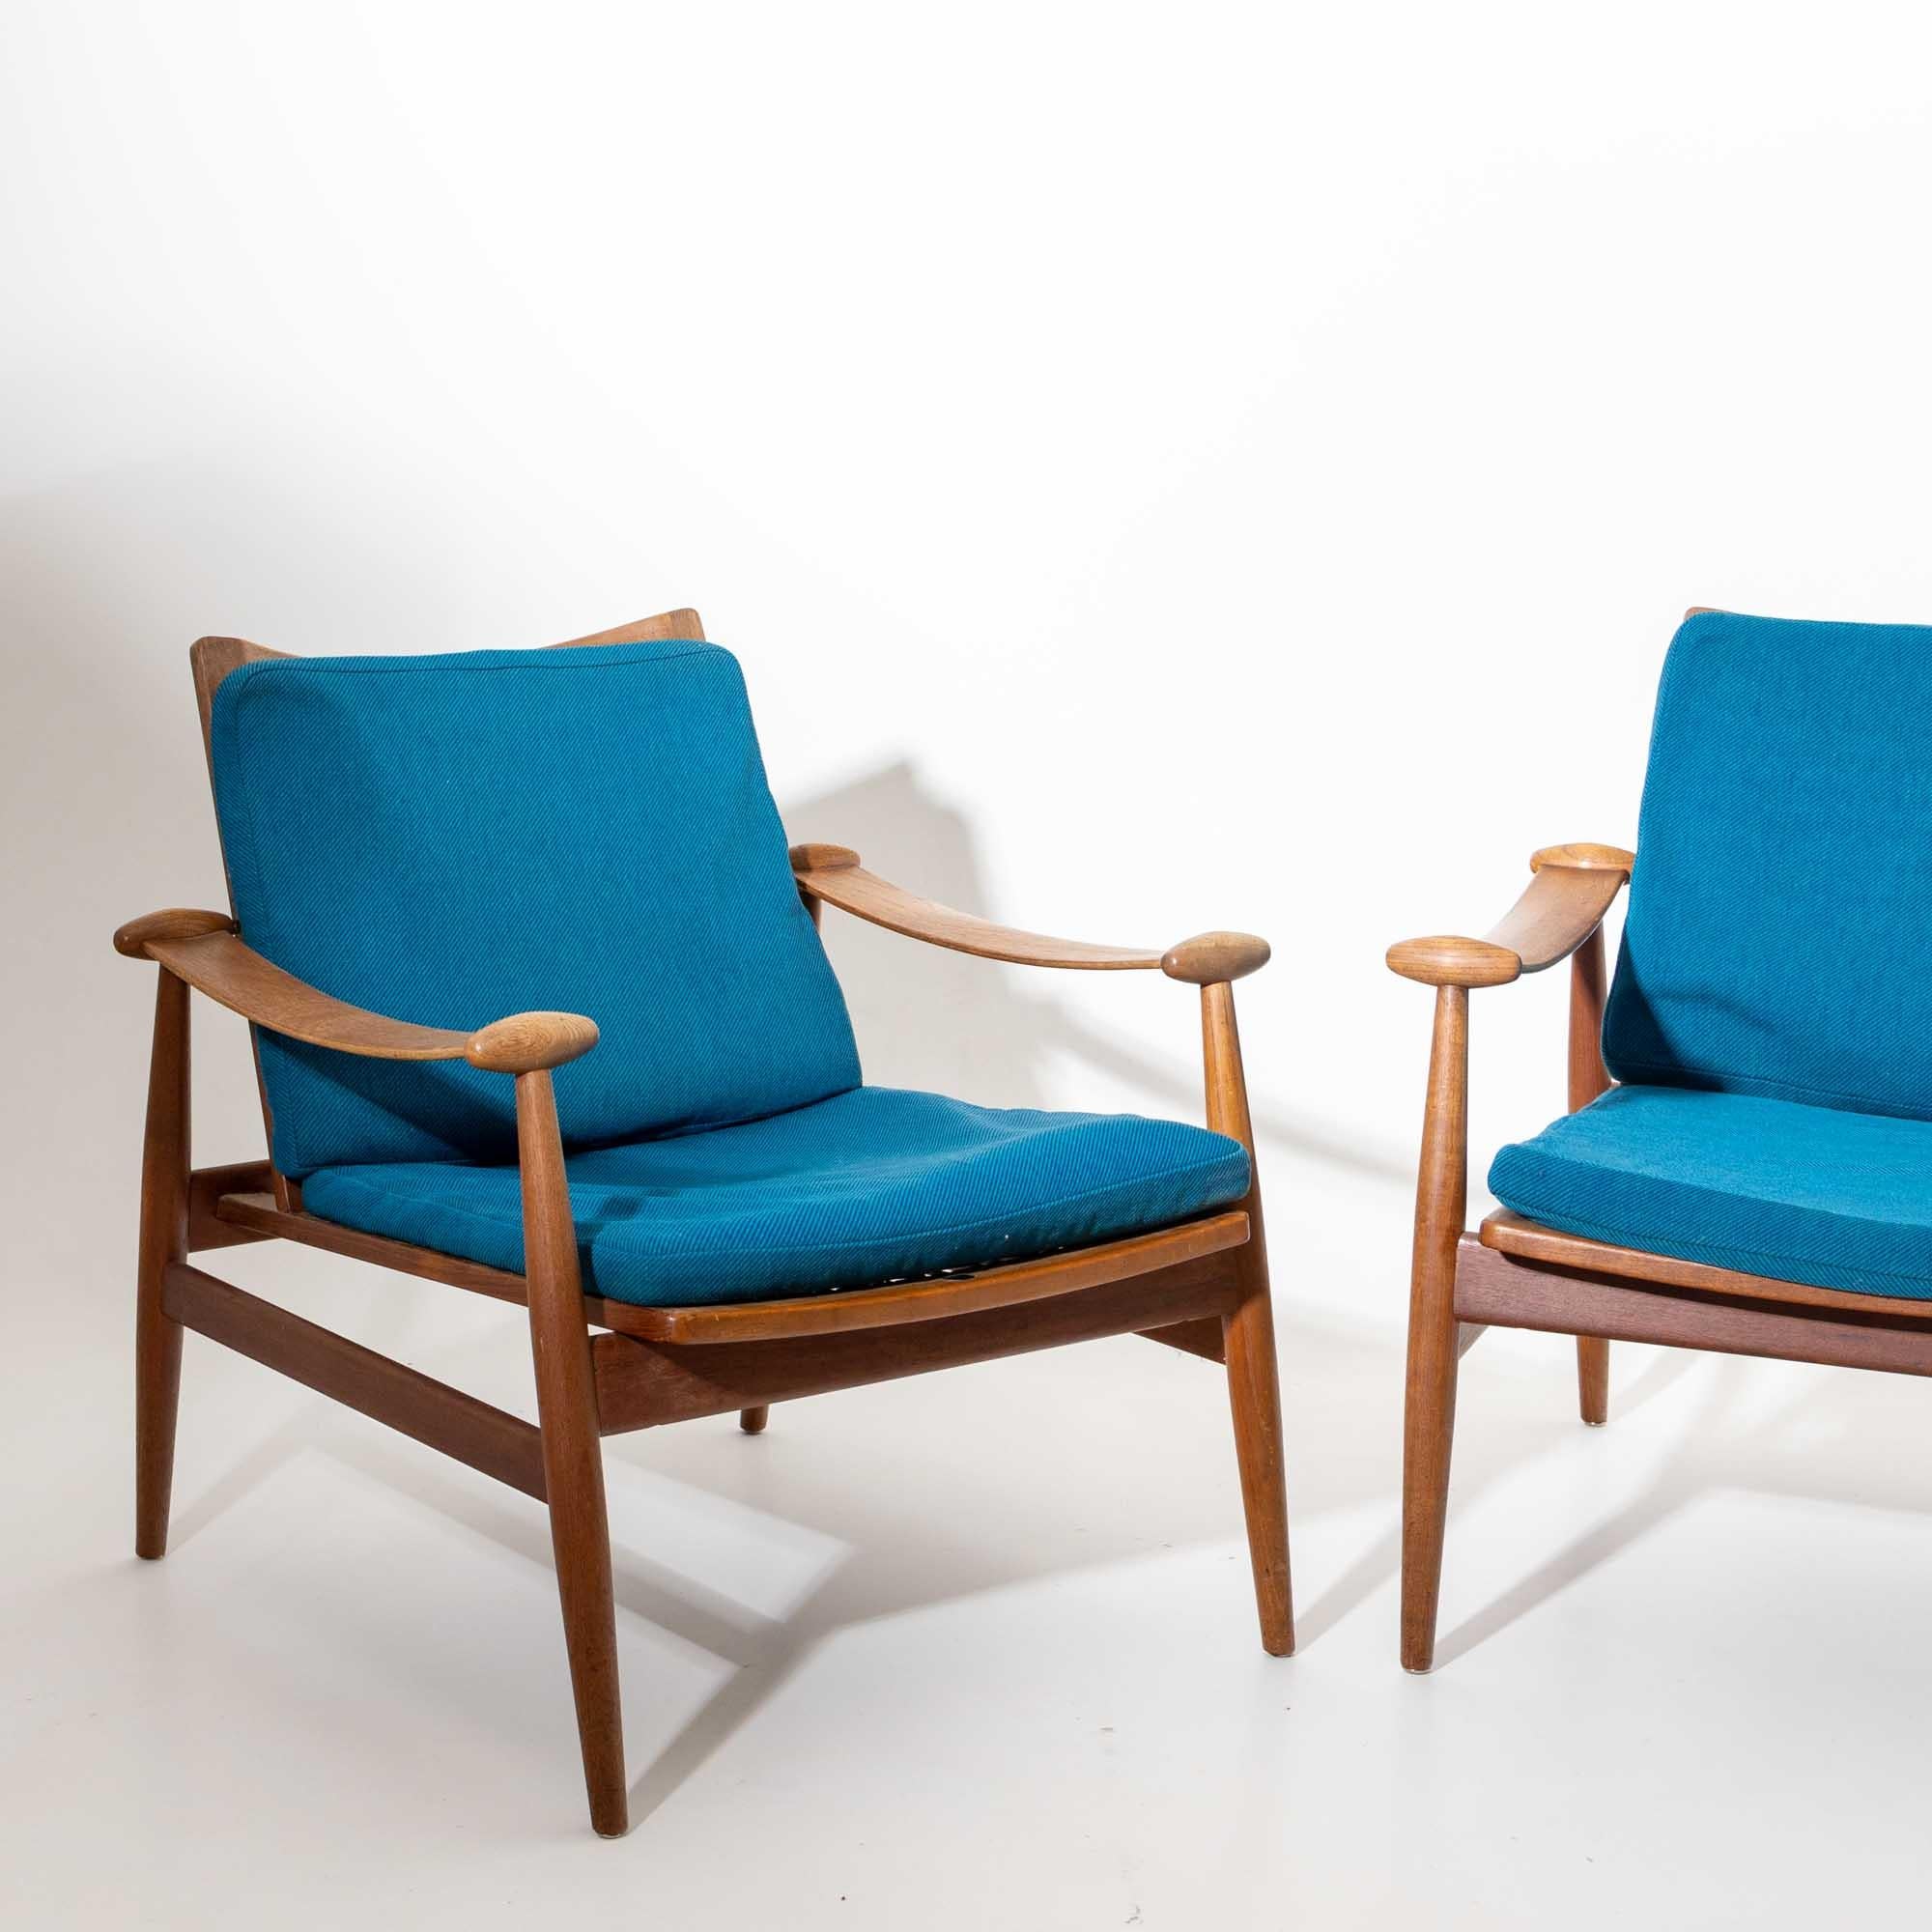 Mid-20th Century Pair of Spade Chairs by Finn Juhl for France & Son, Denmark 1960s